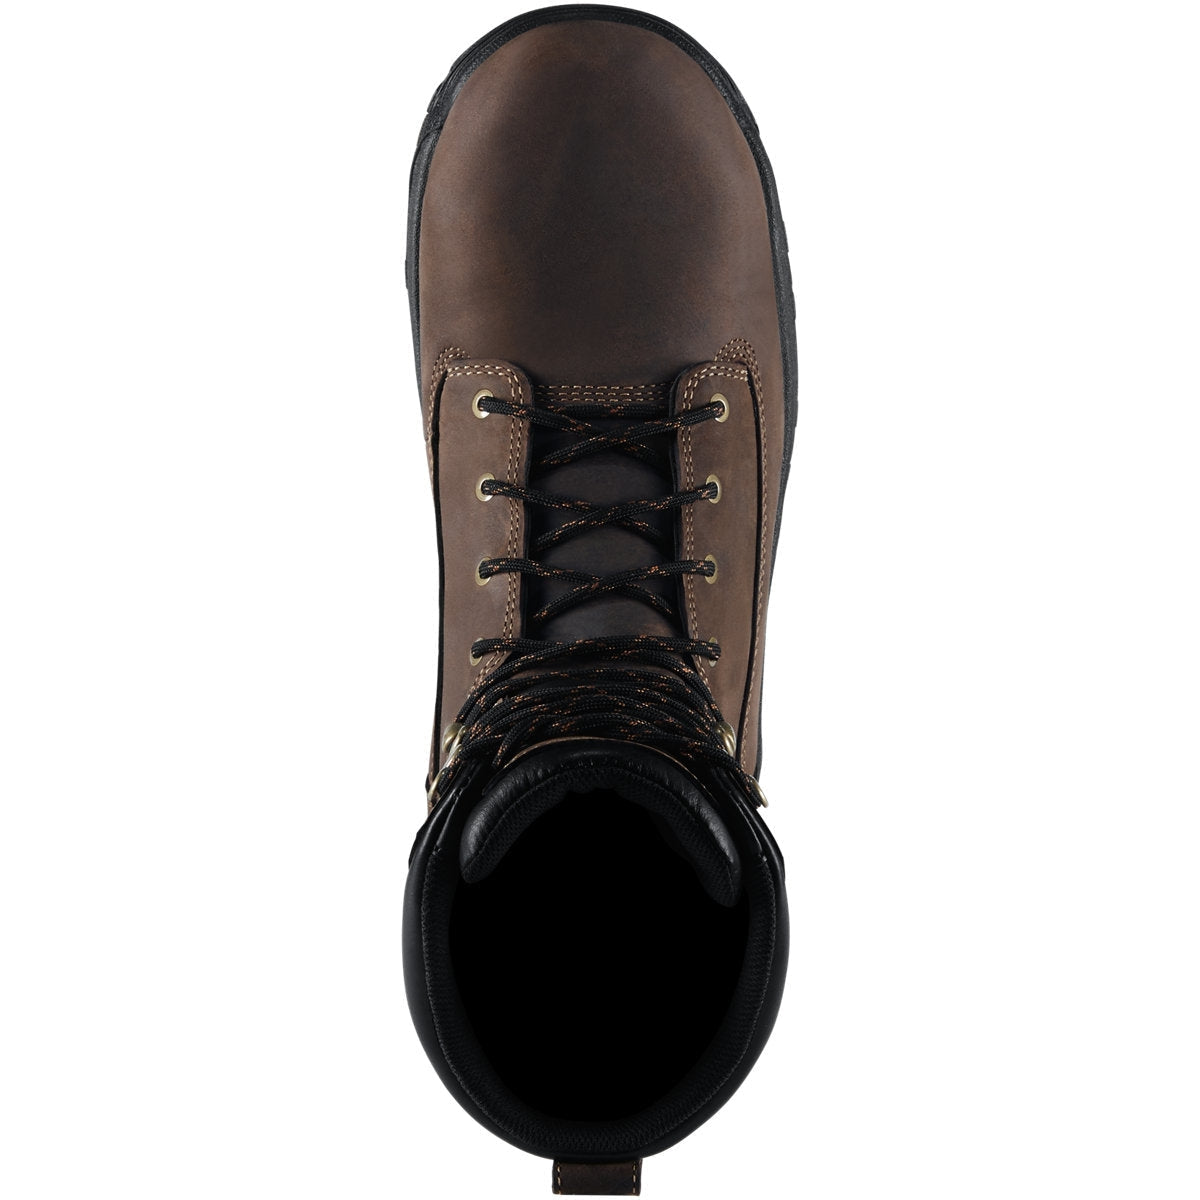 Danner Men's Caliper 8" Aluminum Toe WP Lace Up Work Boot - Brown - 19459  - Overlook Boots